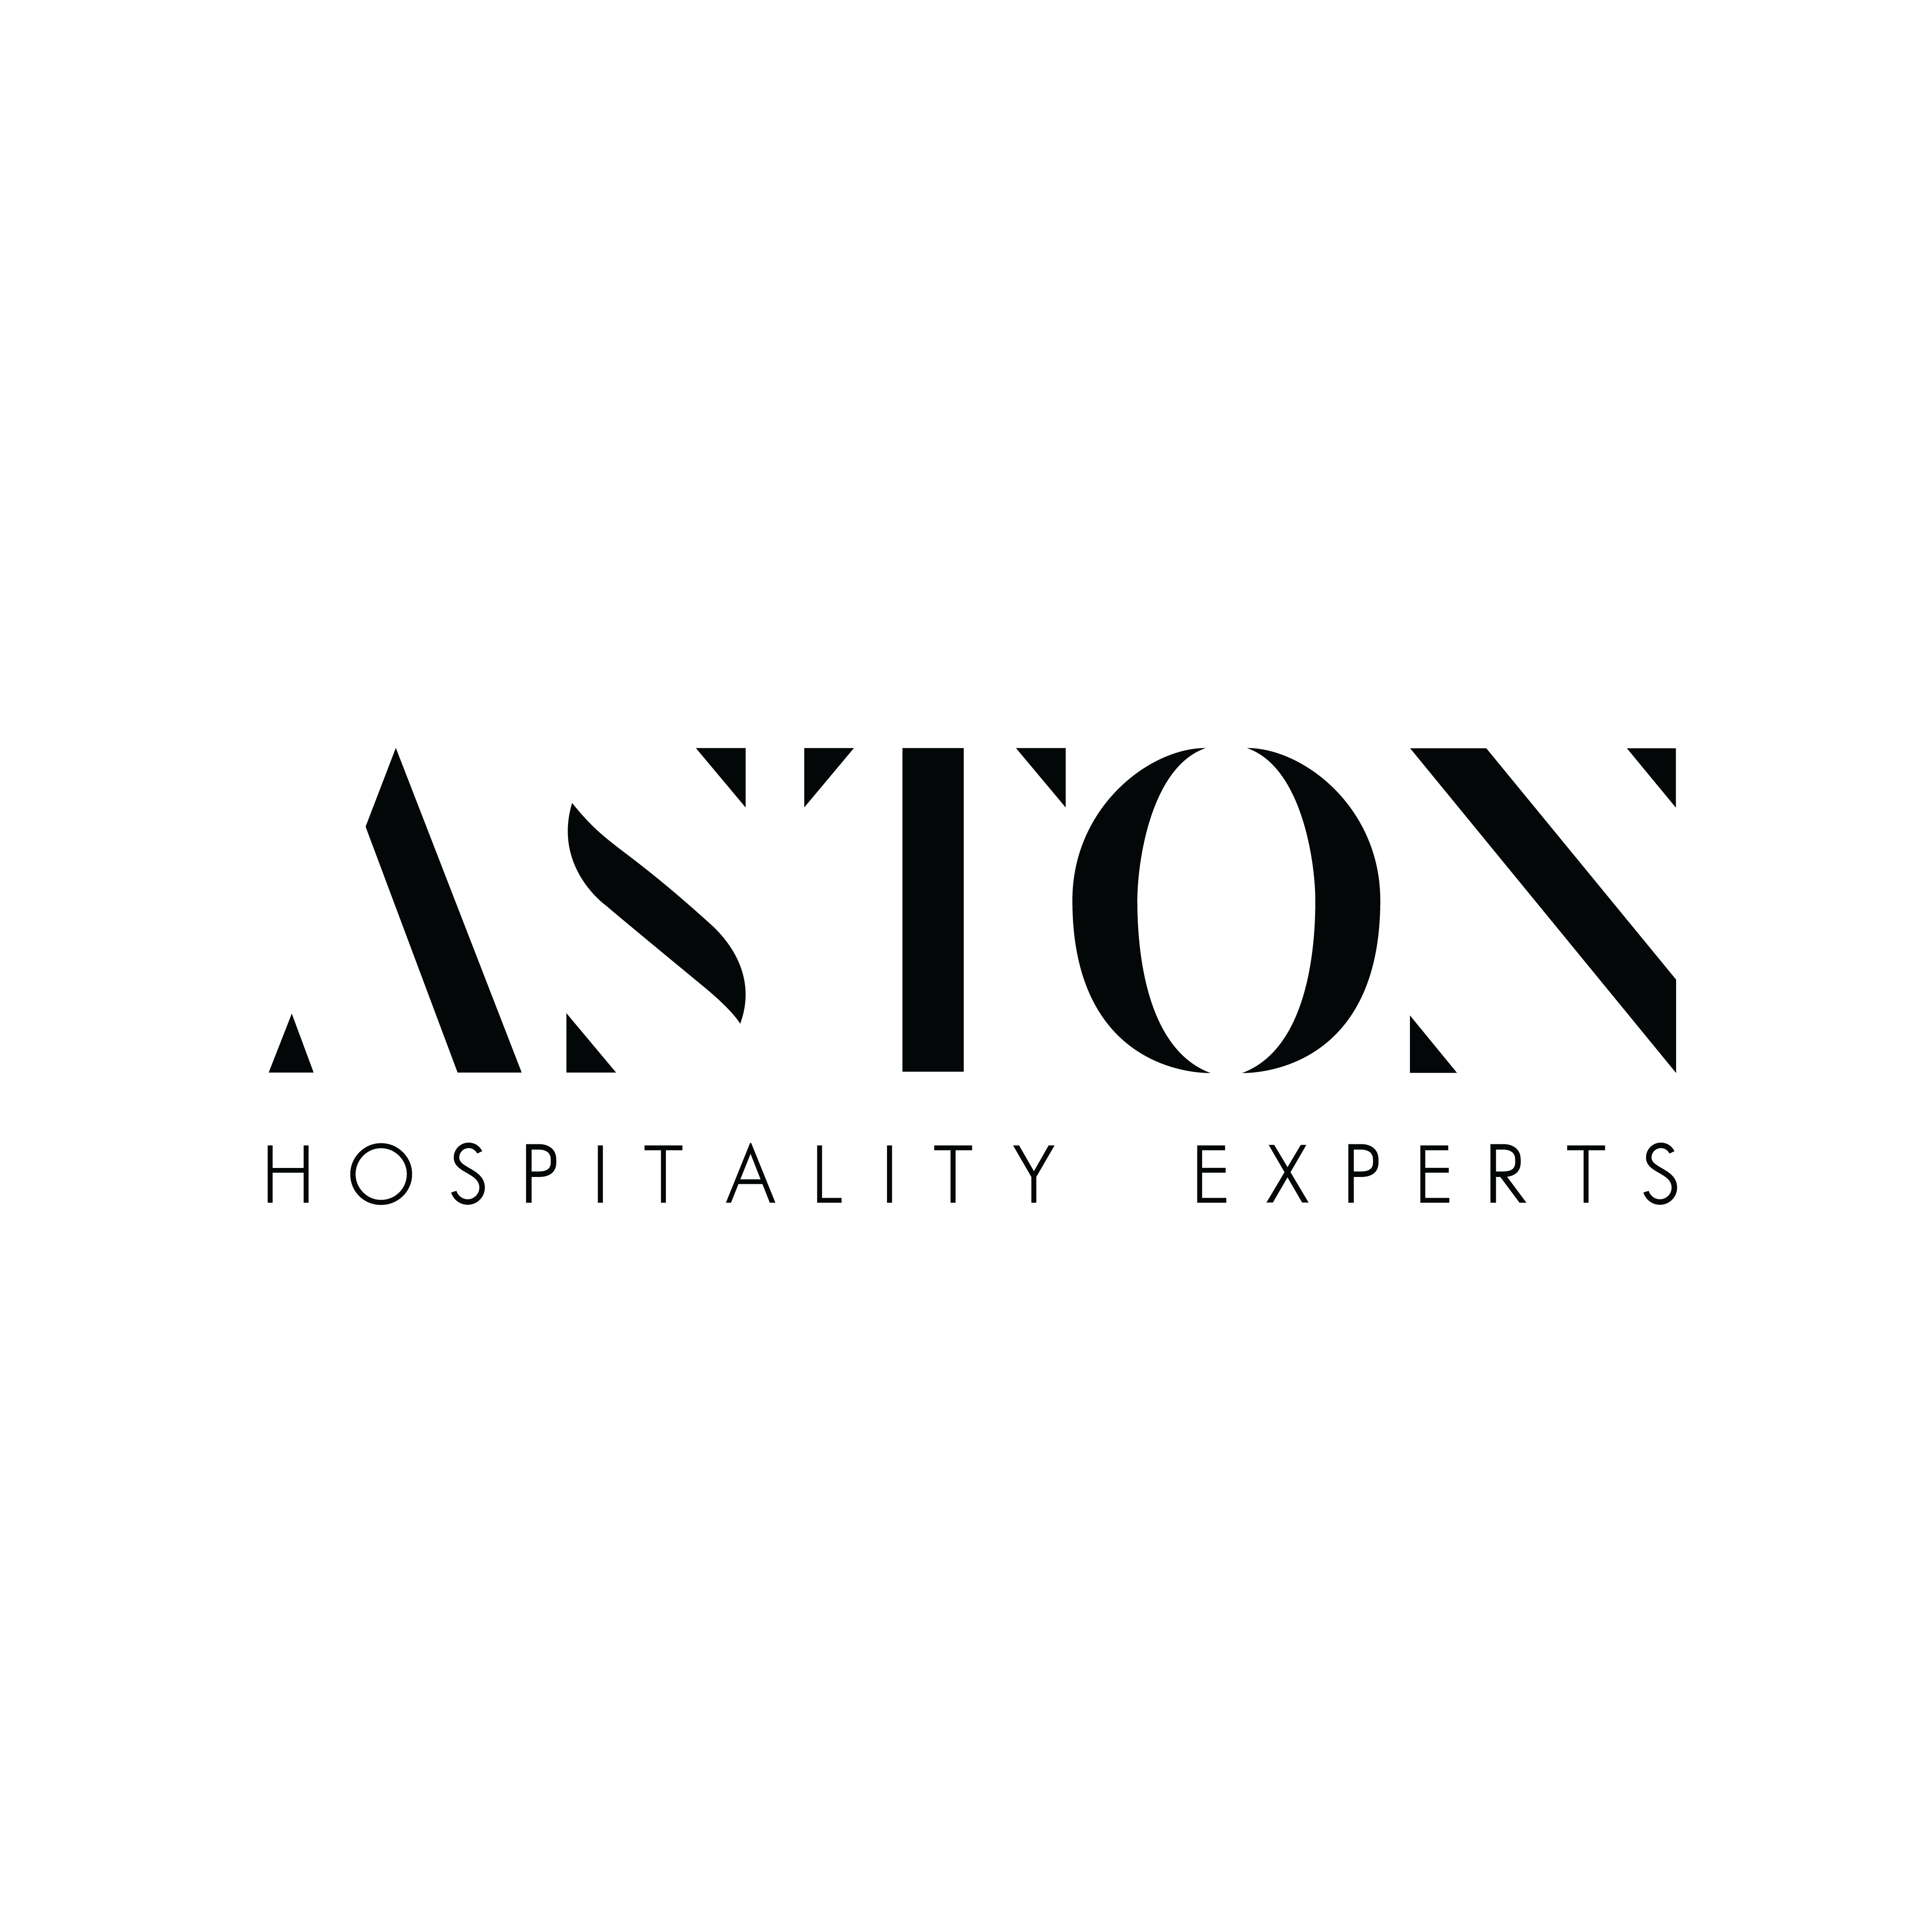 Logo Aston Experts in Hospitality